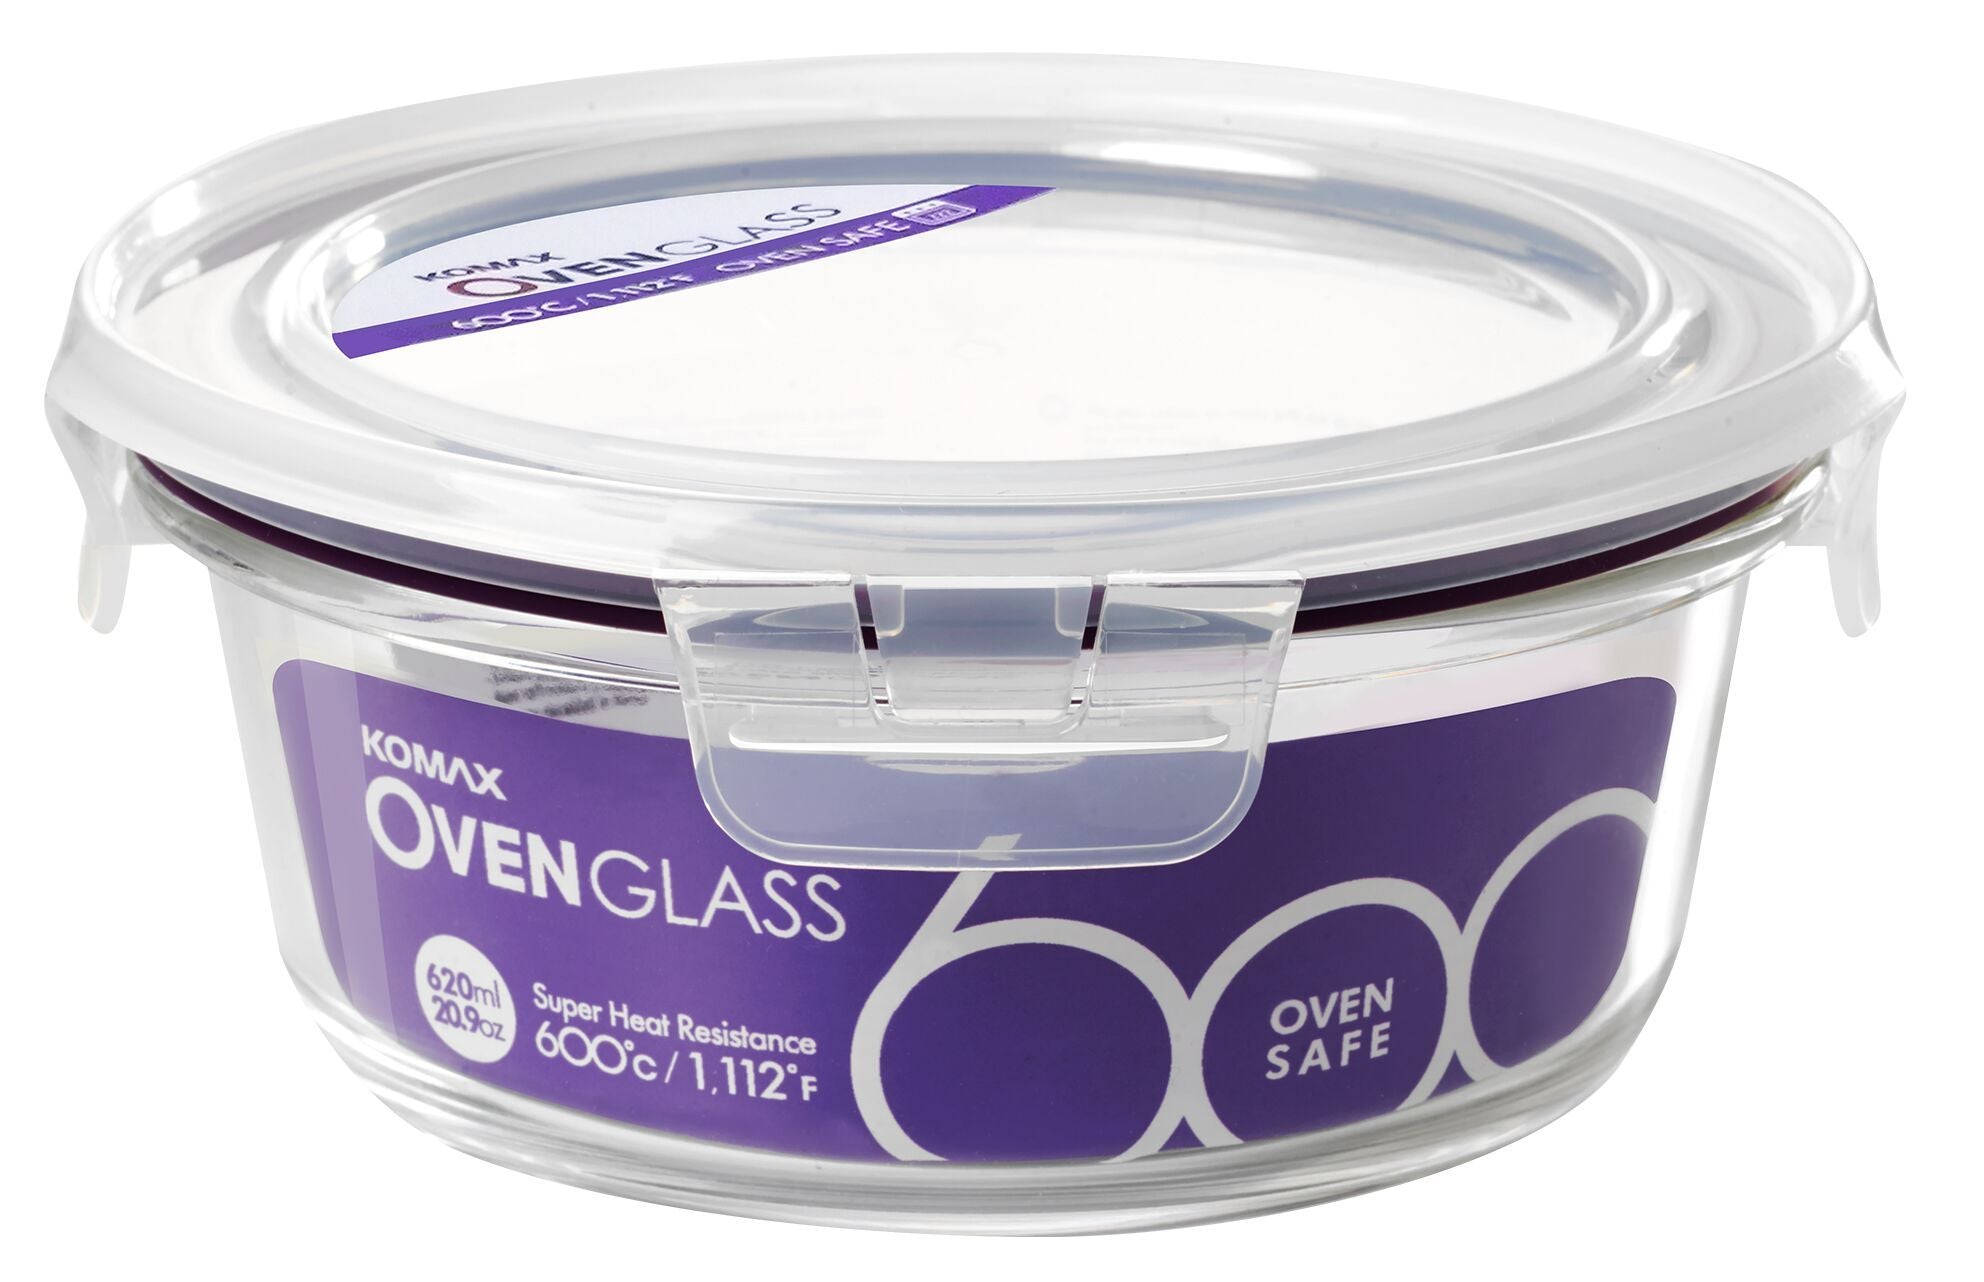 Komax Oven Glass Round Food Storage Container, 620 ml